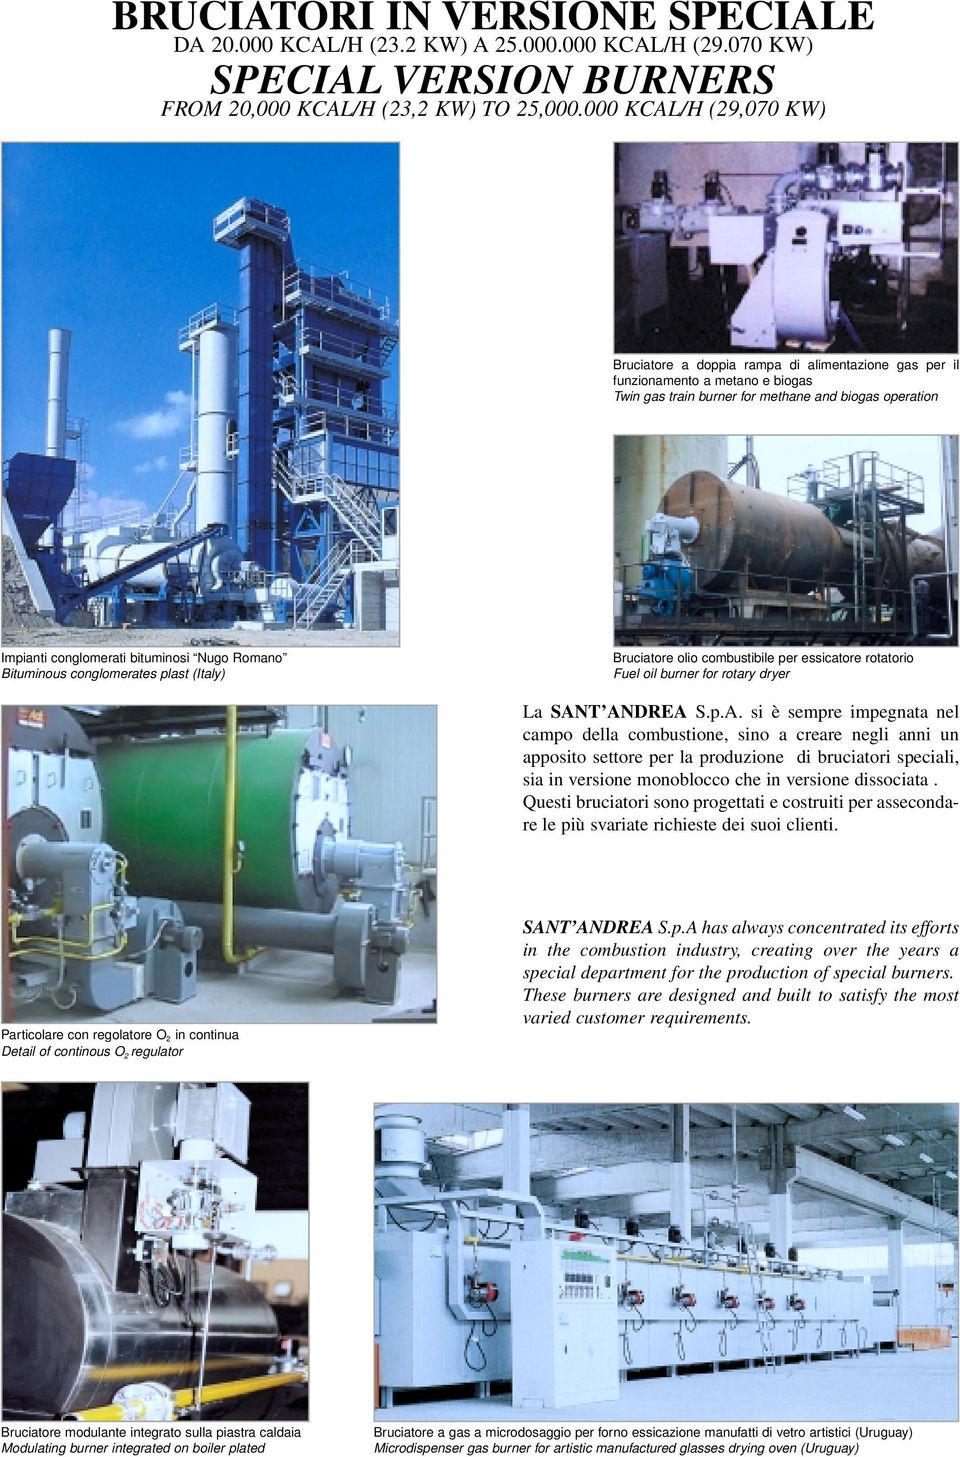 Nugo Romano Bituminous conglomerates plast (Italy) Bruciatore olio combustibile per essicatore rotatorio Fuel oil burner for rotary dryer La SAN